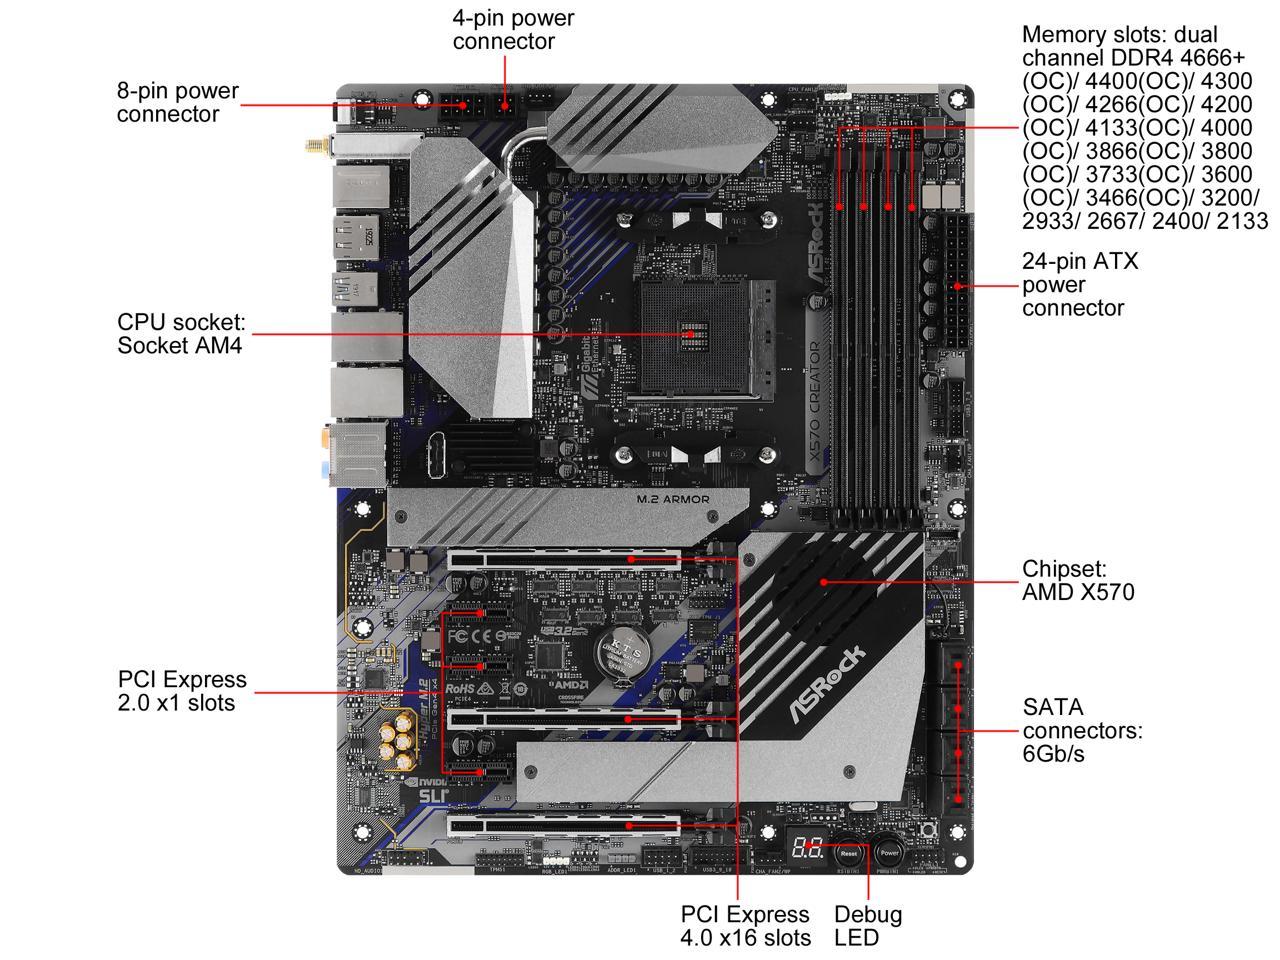 ASRock X570 CREATOR AM4 AMD X570 SATA 6Gb/s ATX AMD Motherboard | eBay